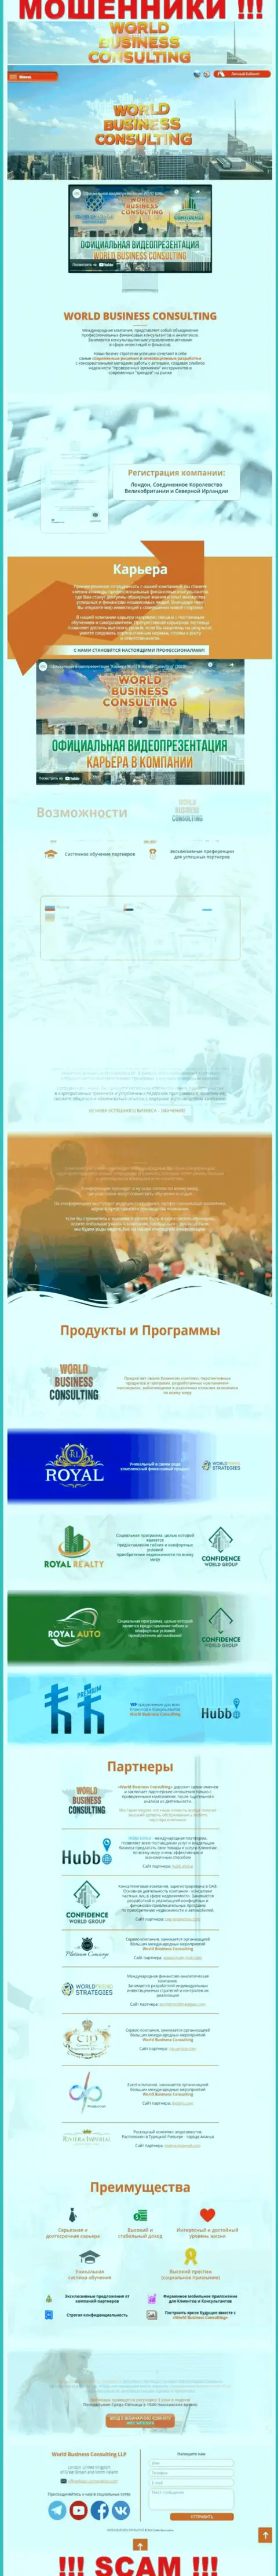 Онлайн-ресурс мошенников World Business Consulting